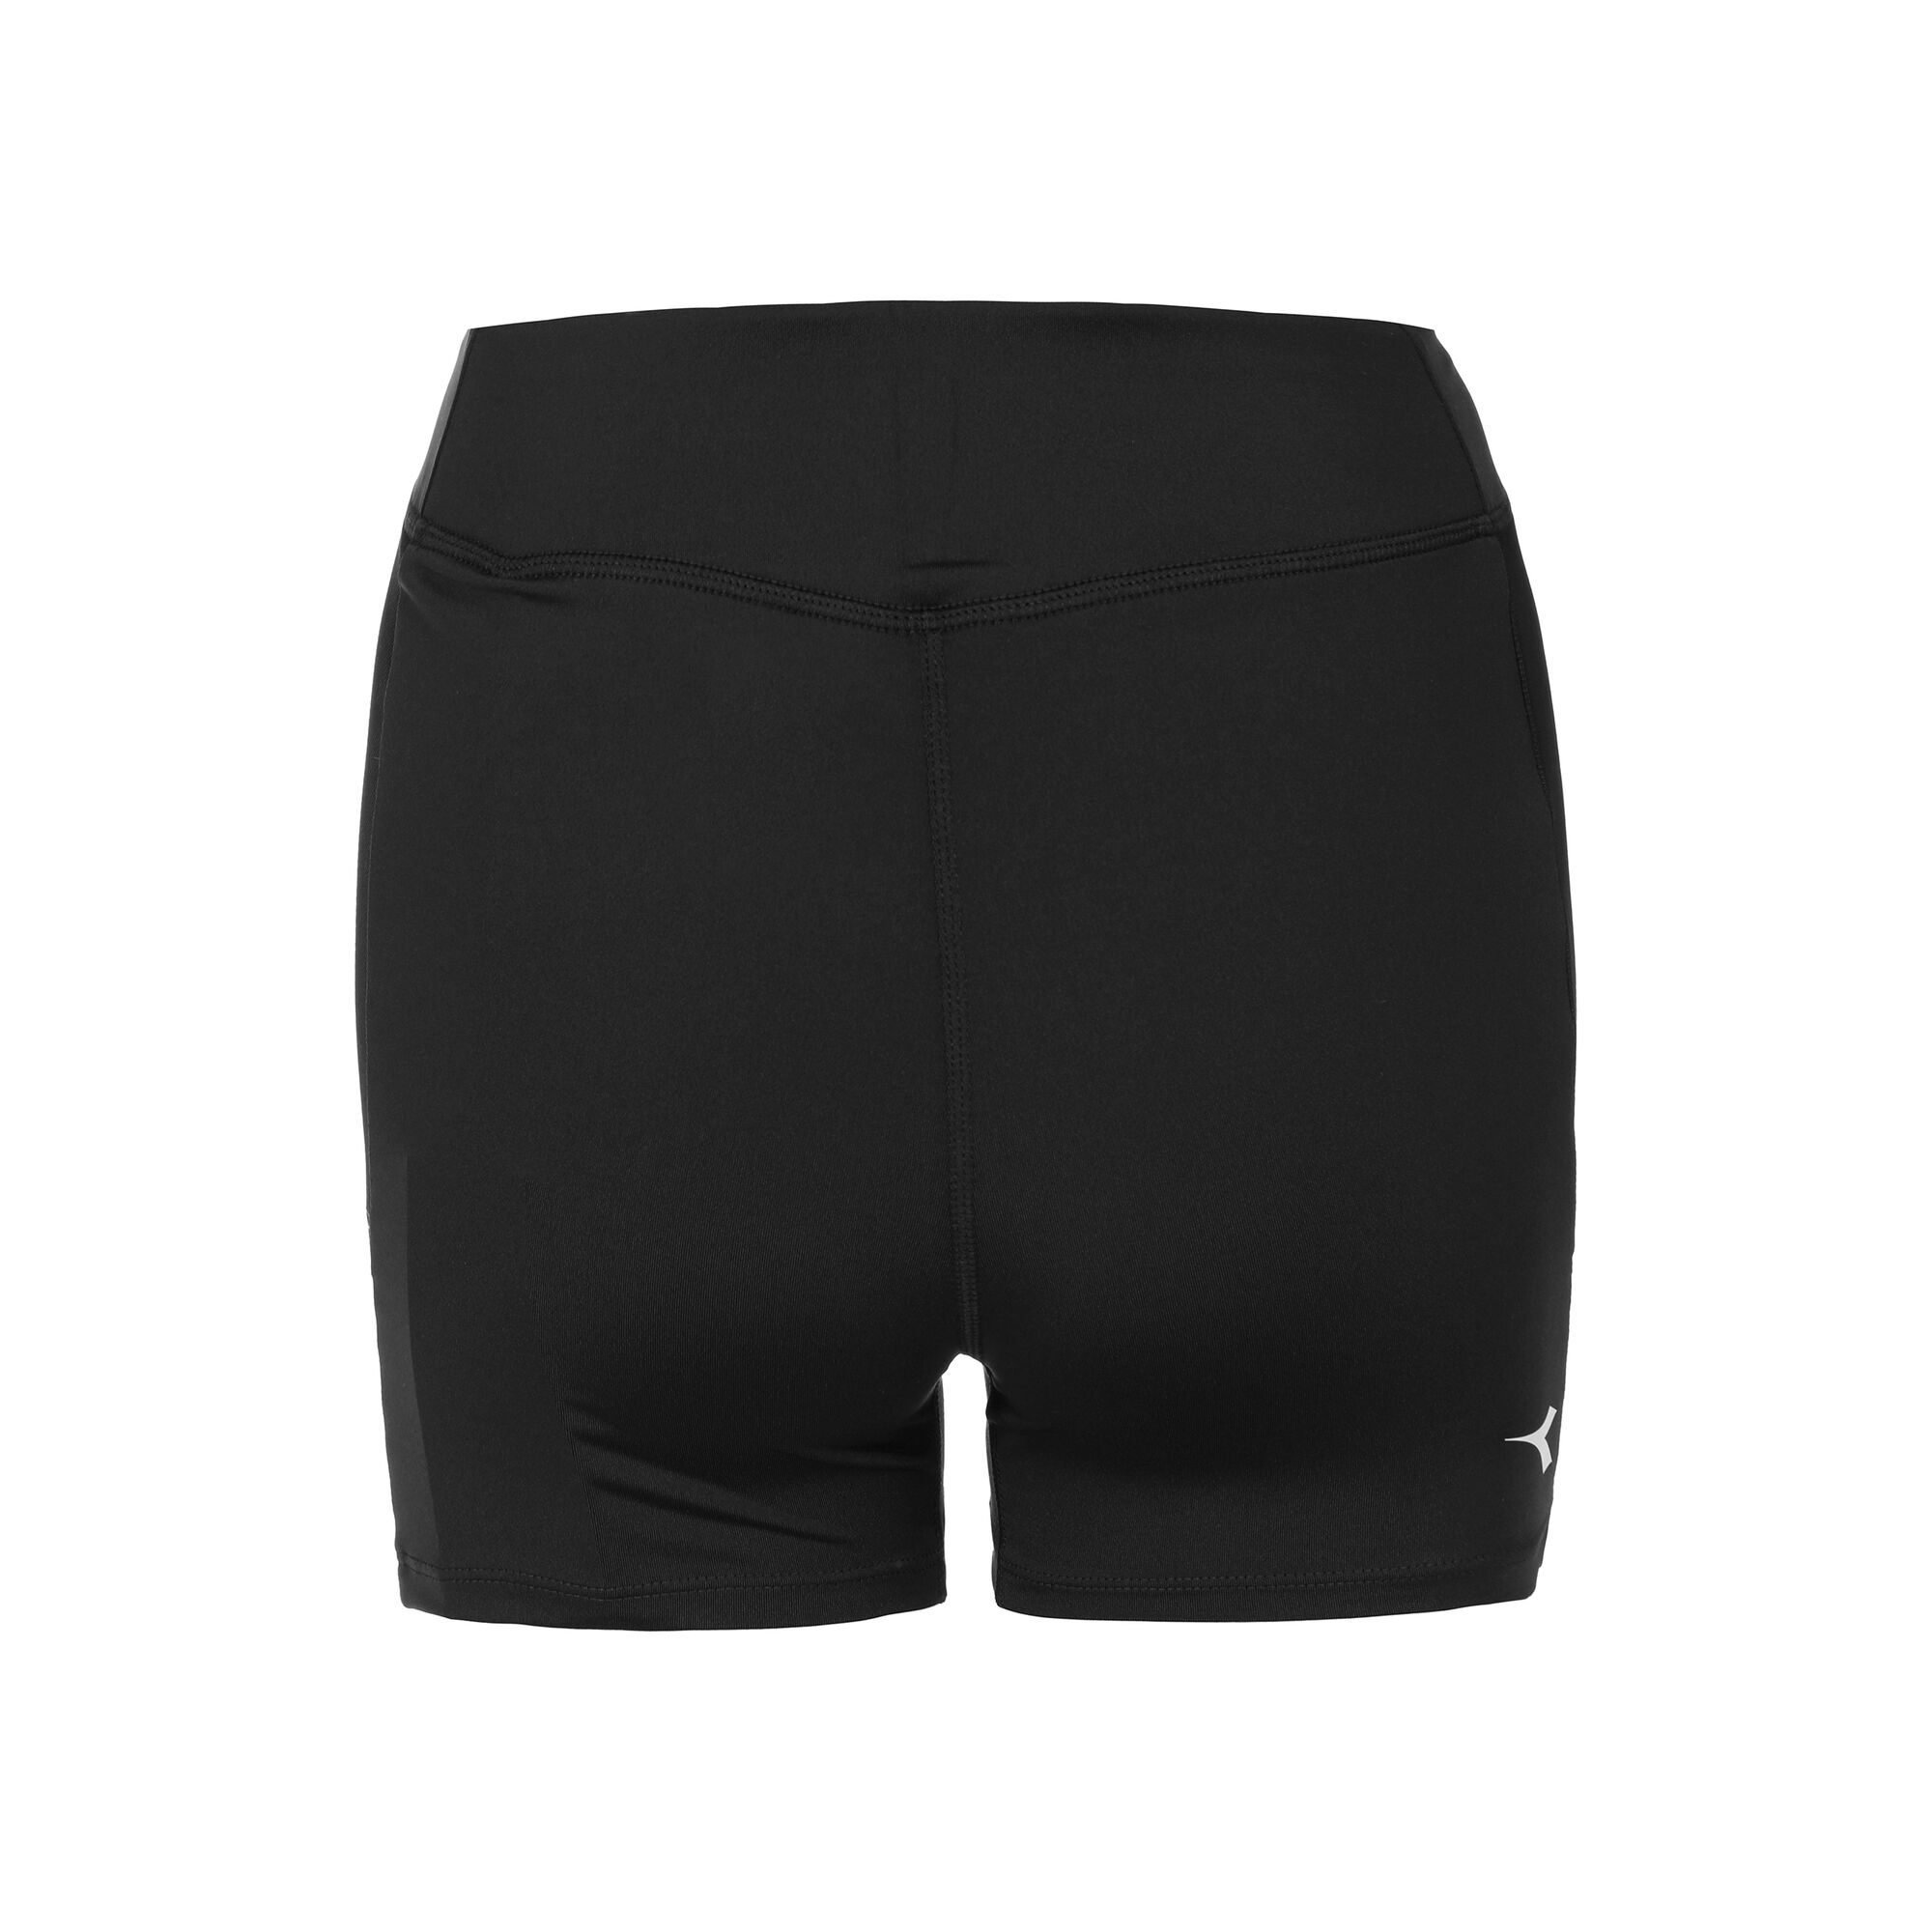 L. Pockets Shorts Women - Black